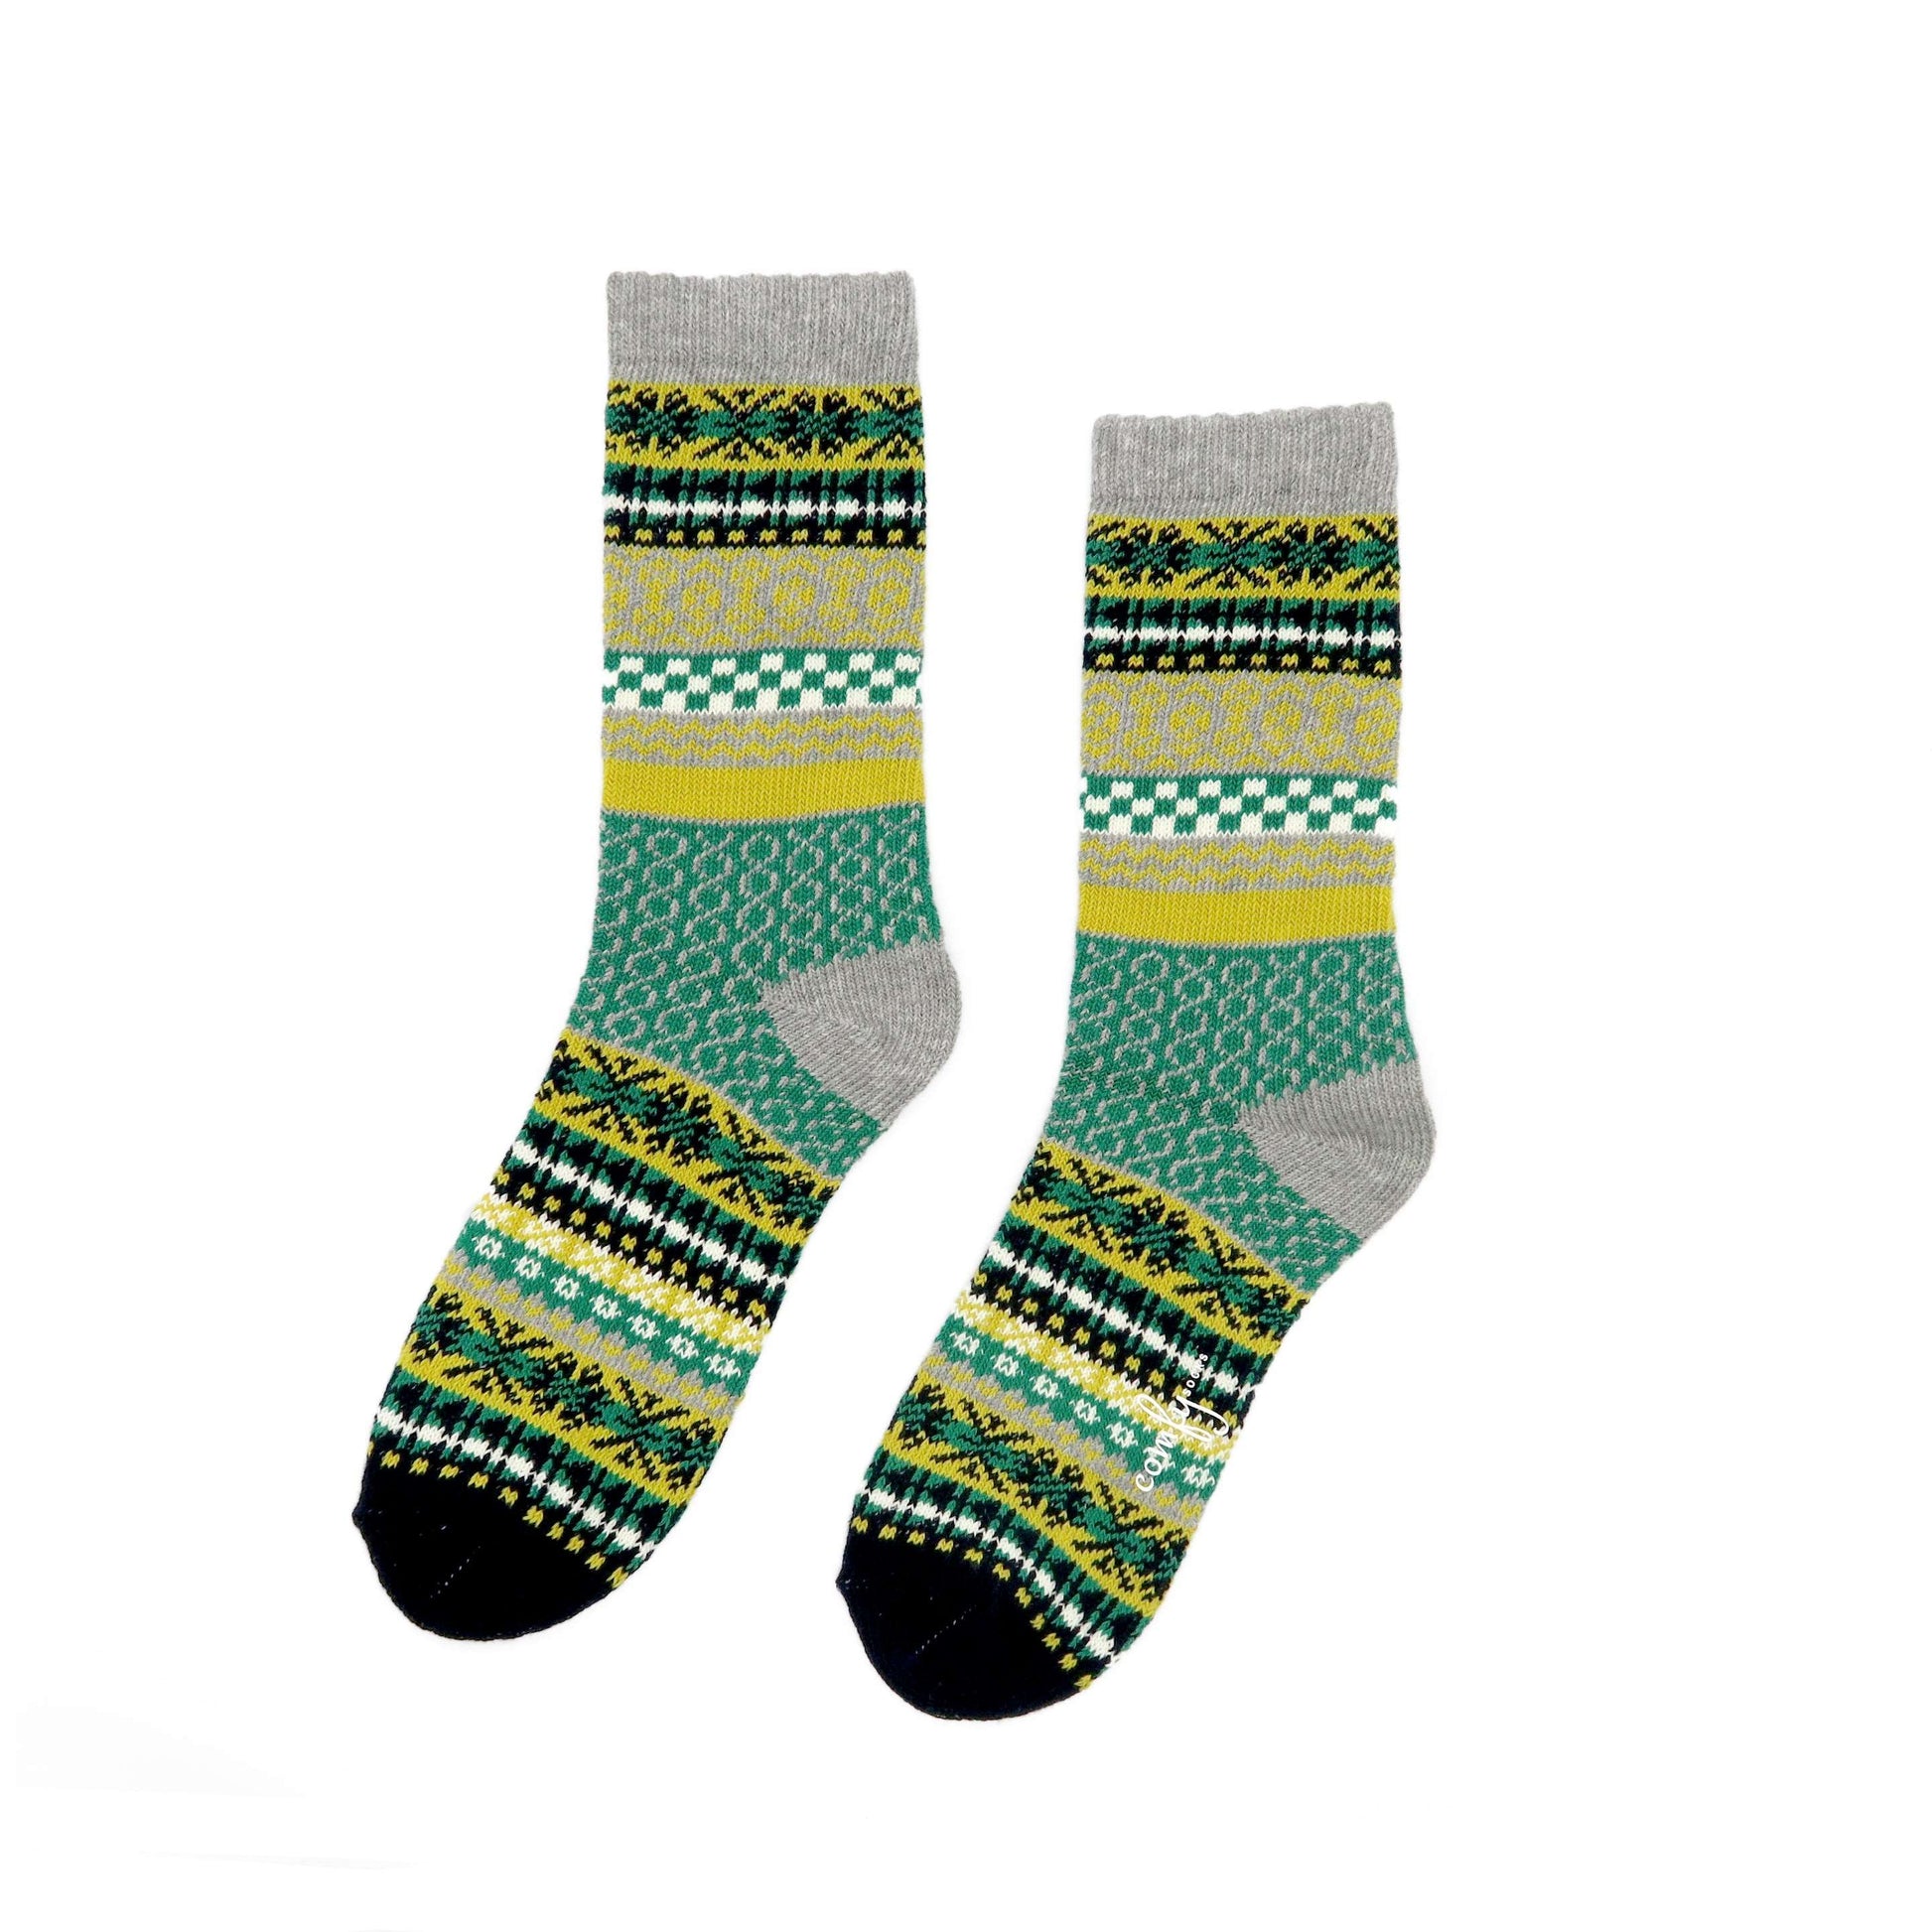 geluk green socks - green tribal pattern sock